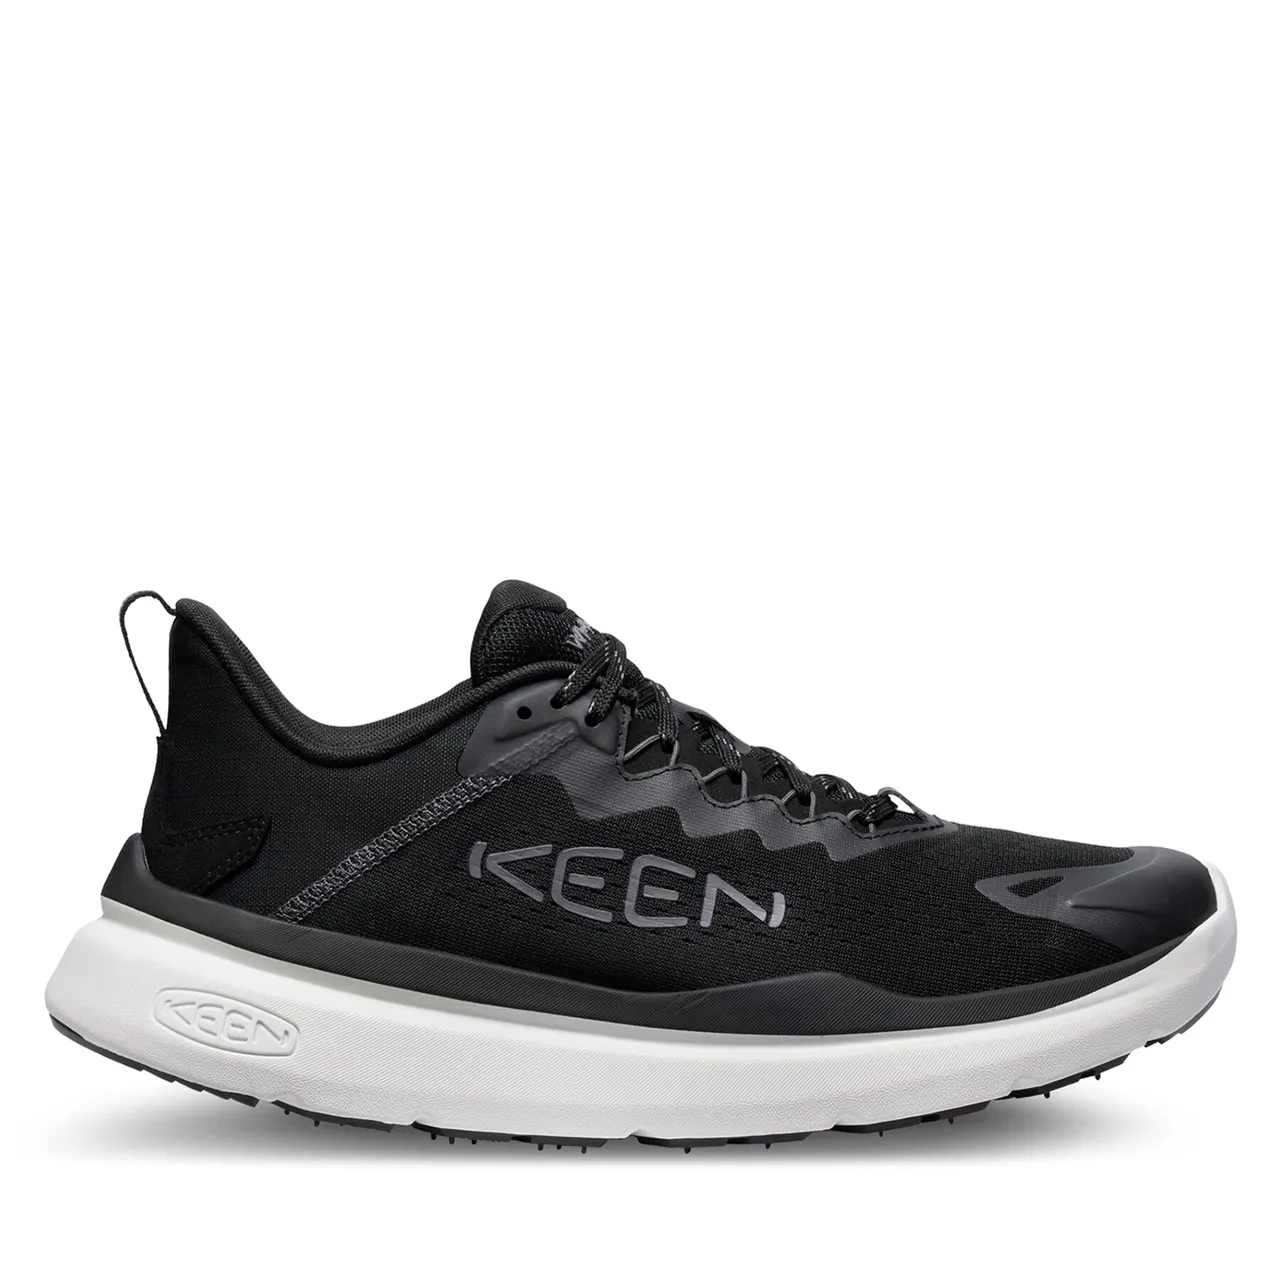 Sneakers Keen WK450 Walking 1028913 Black/Star White